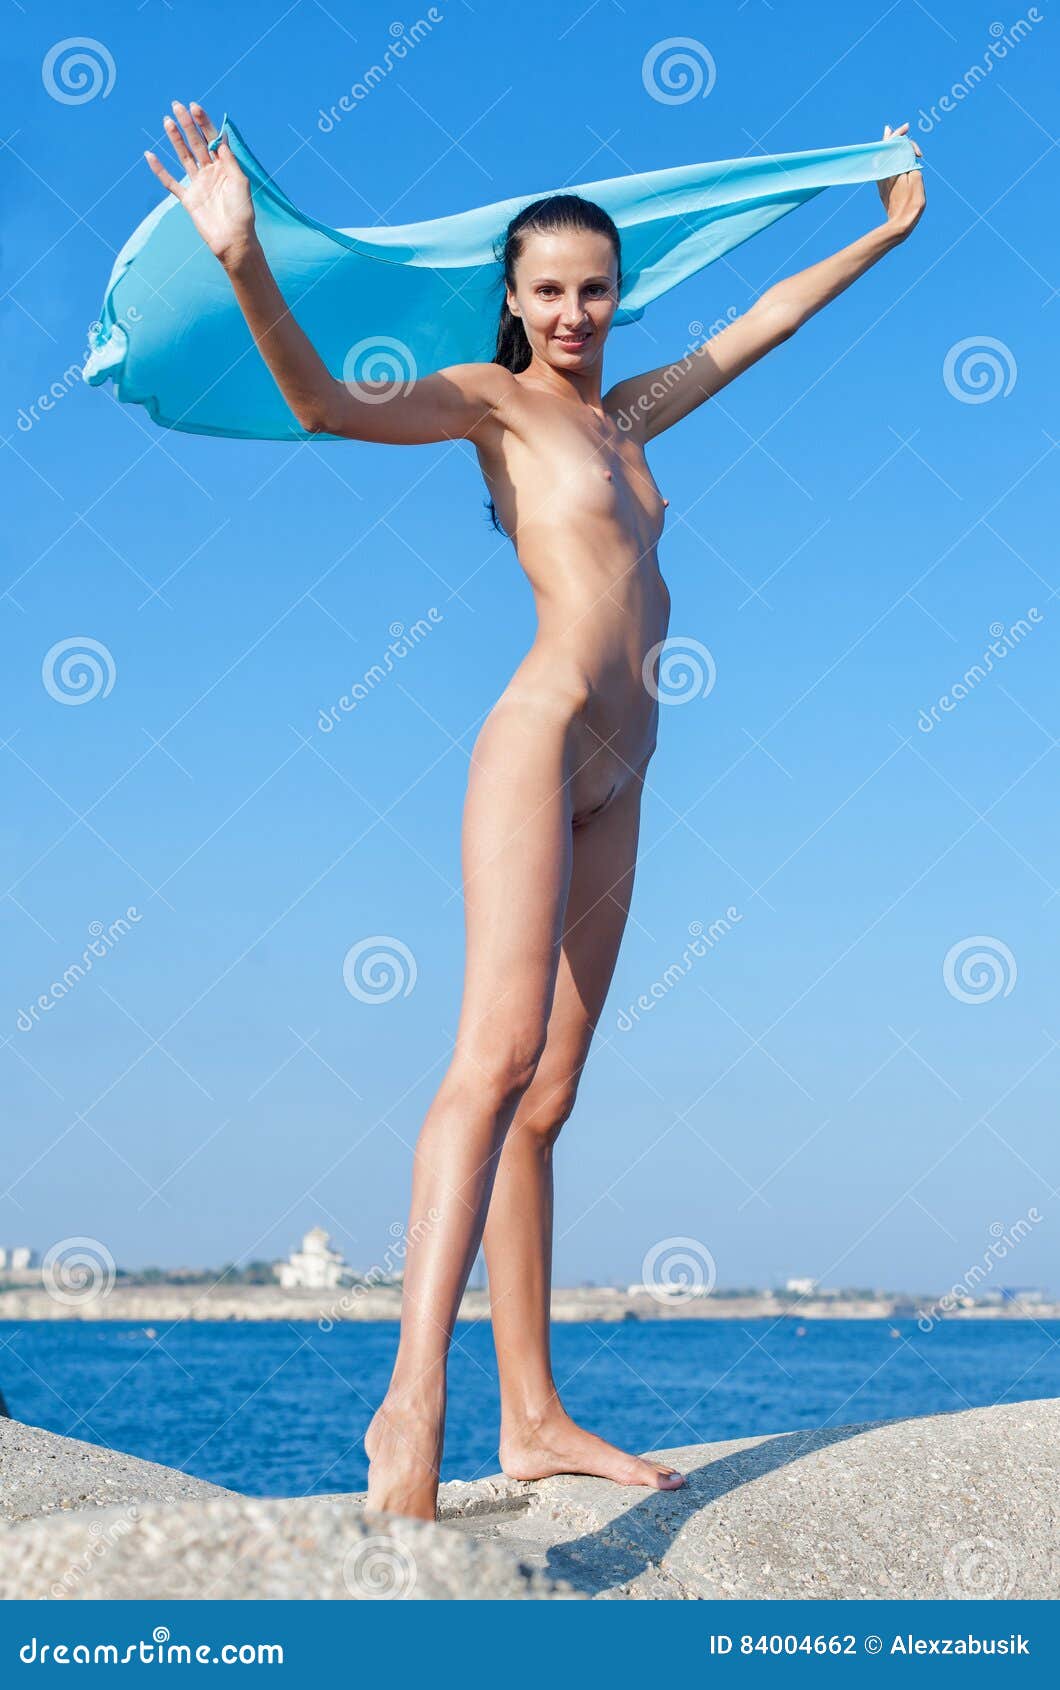 naked skinny woman